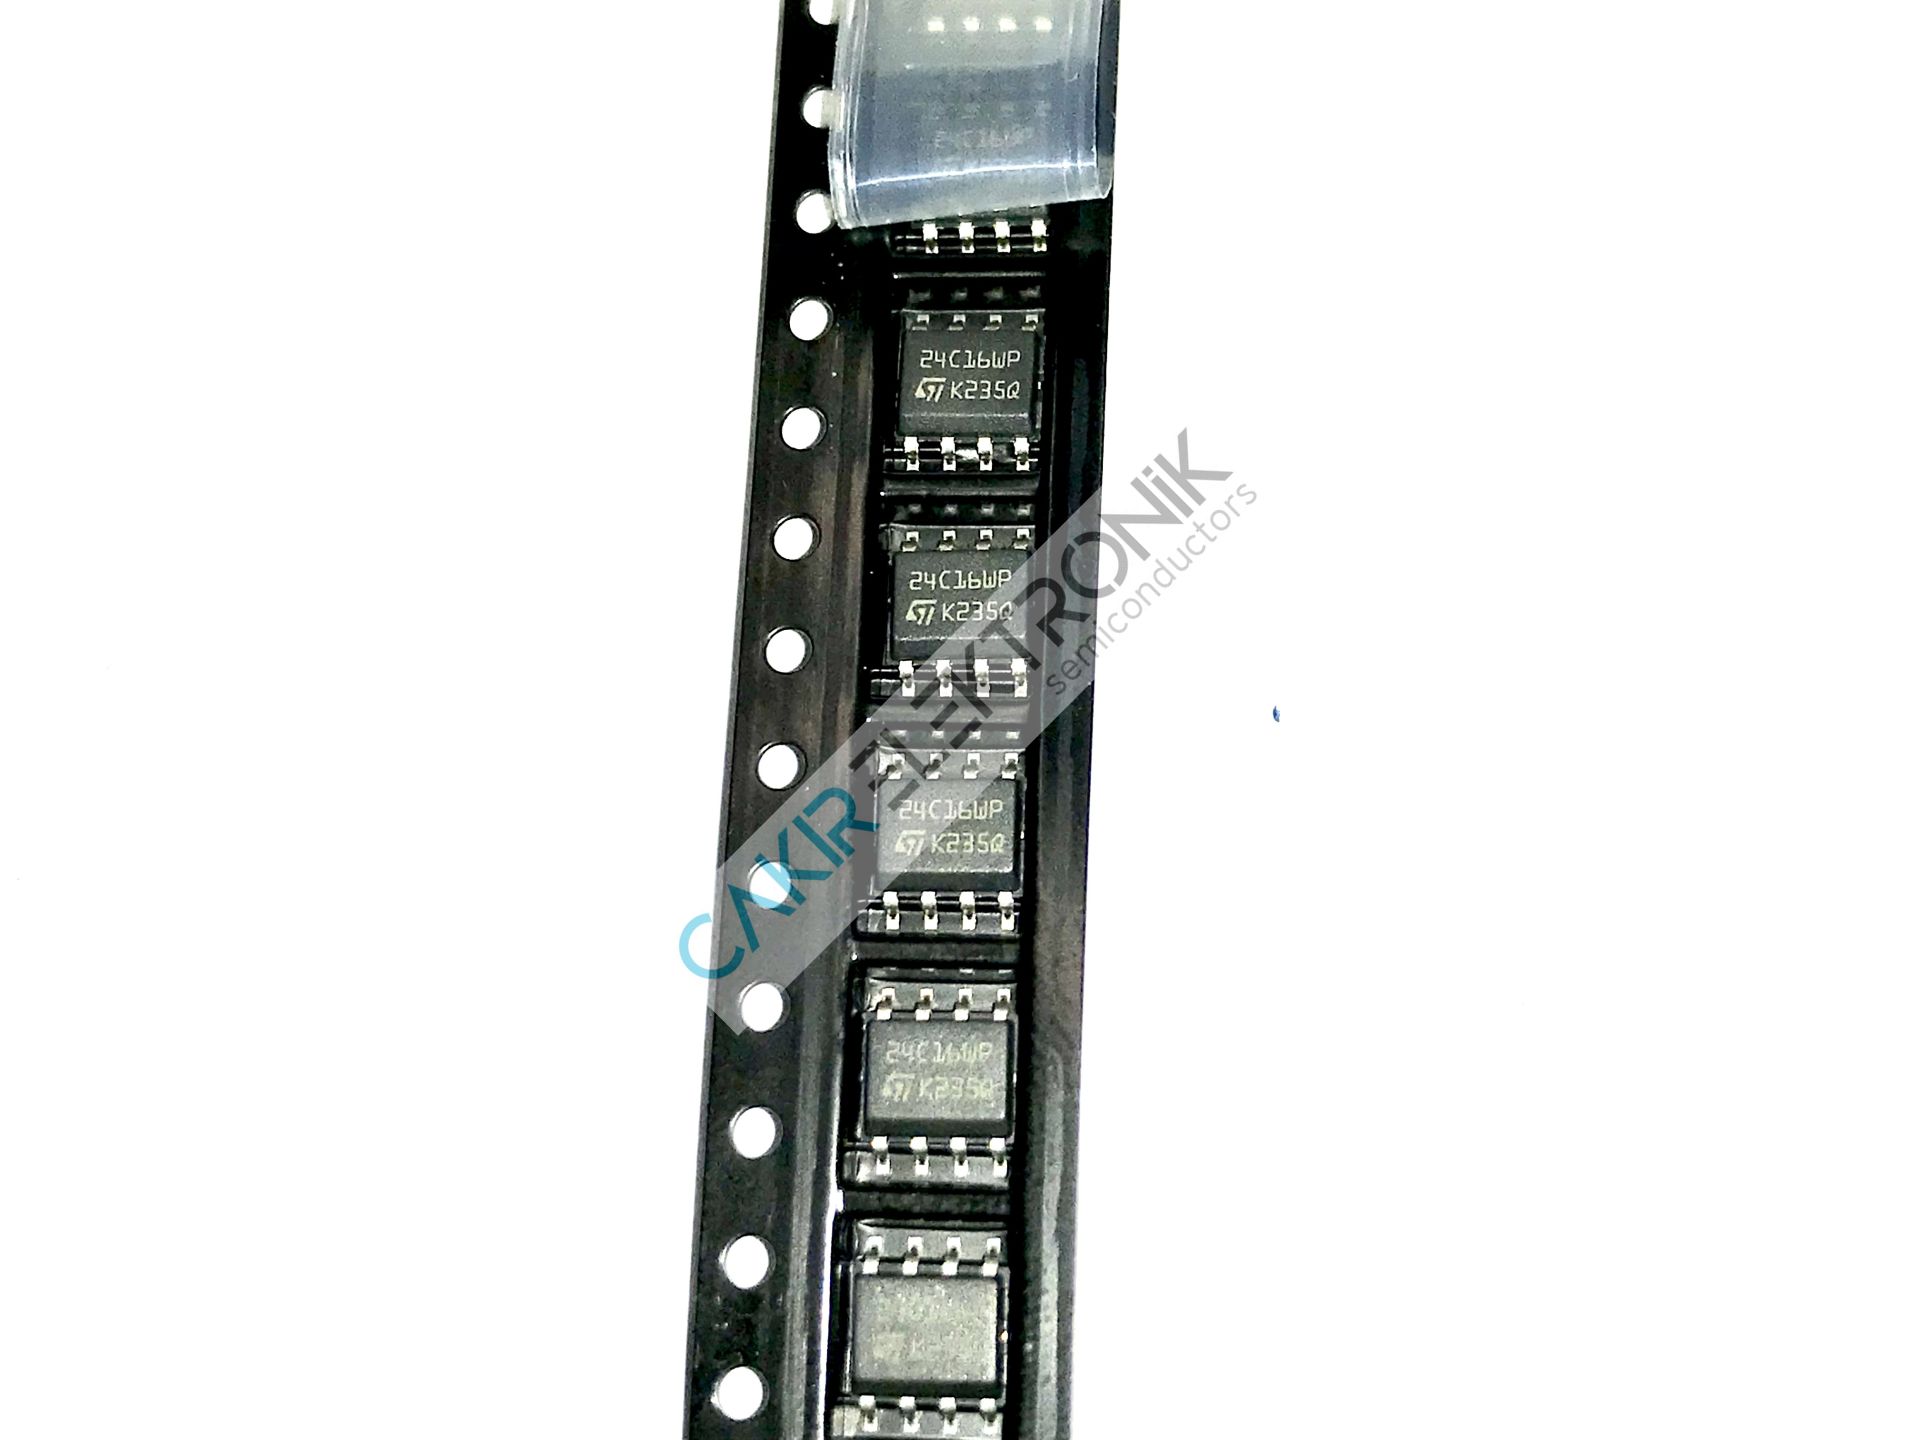 ST 24C16WP - 24C16 - 16K - Bit Standard 2-Wire Bus Interface Serial EEPROM